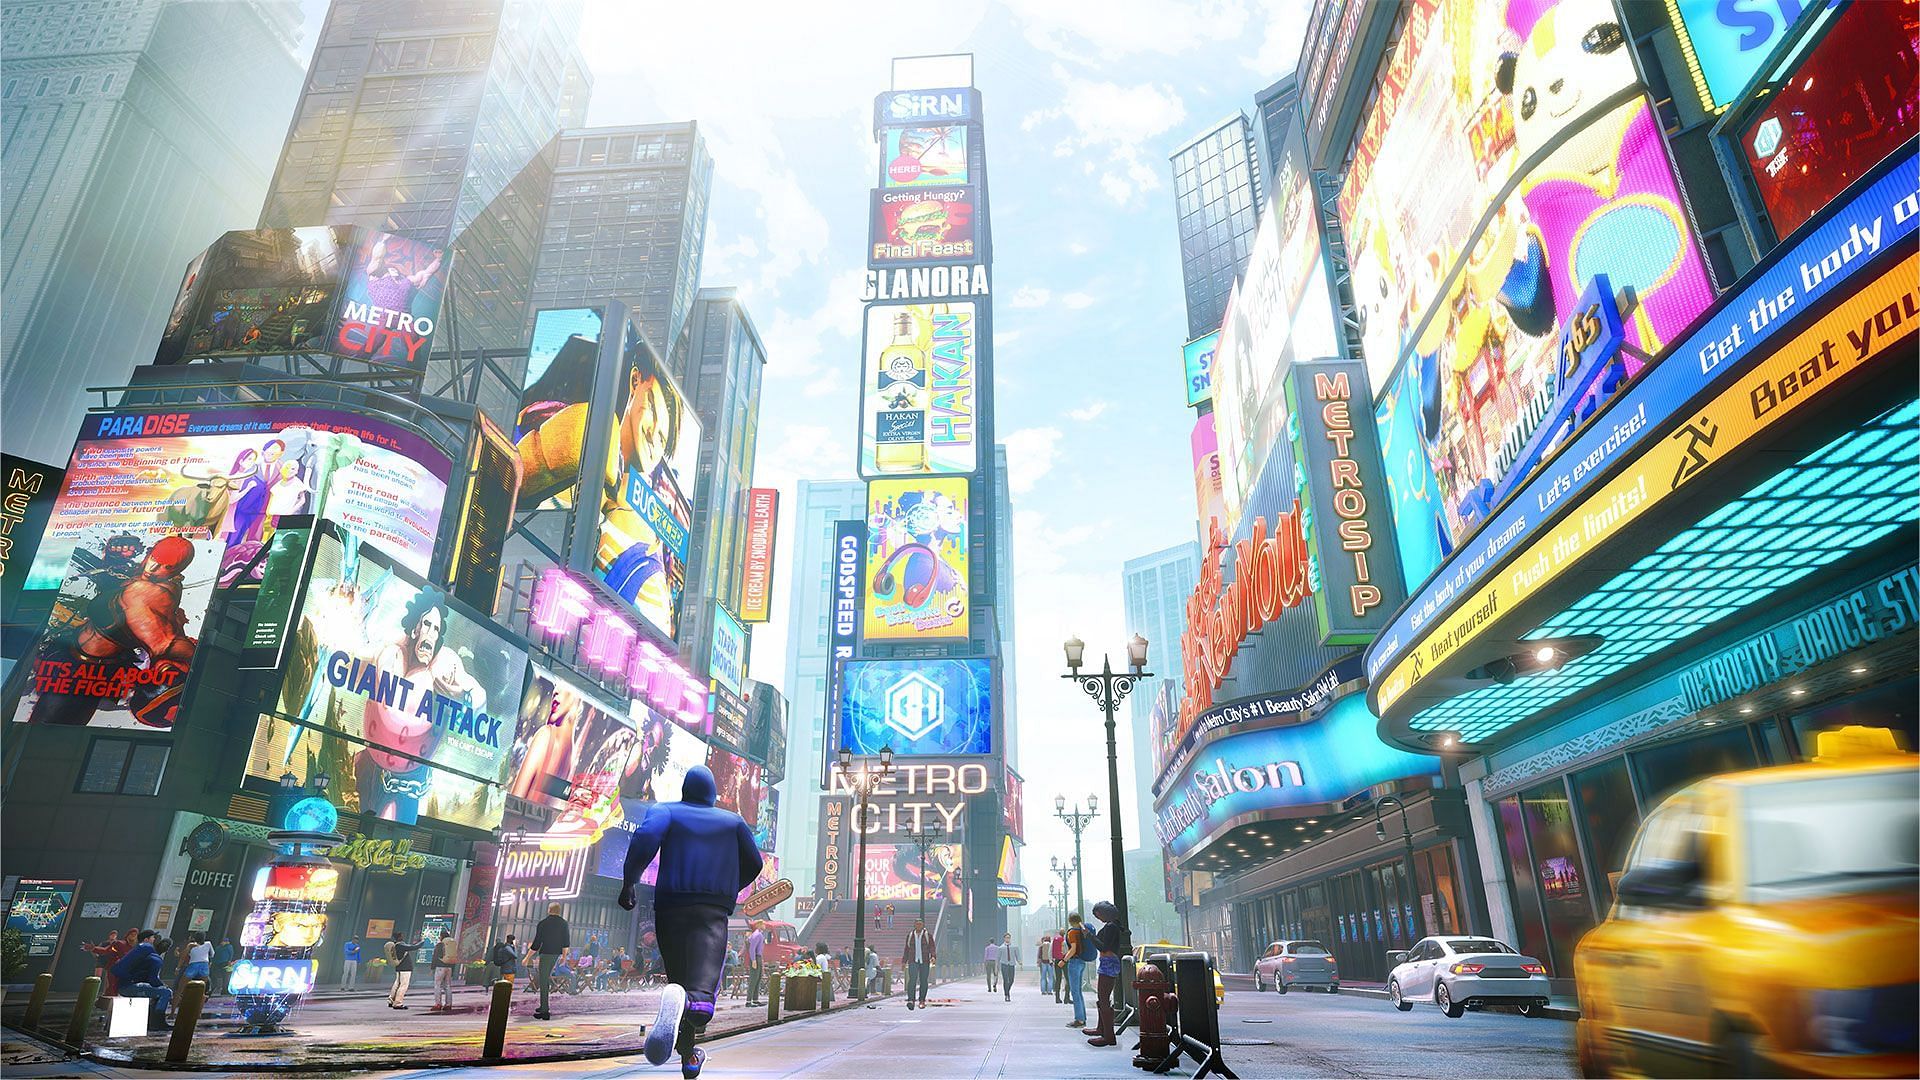 The explorable city in Street Fighter 5 (Image via Capcom)